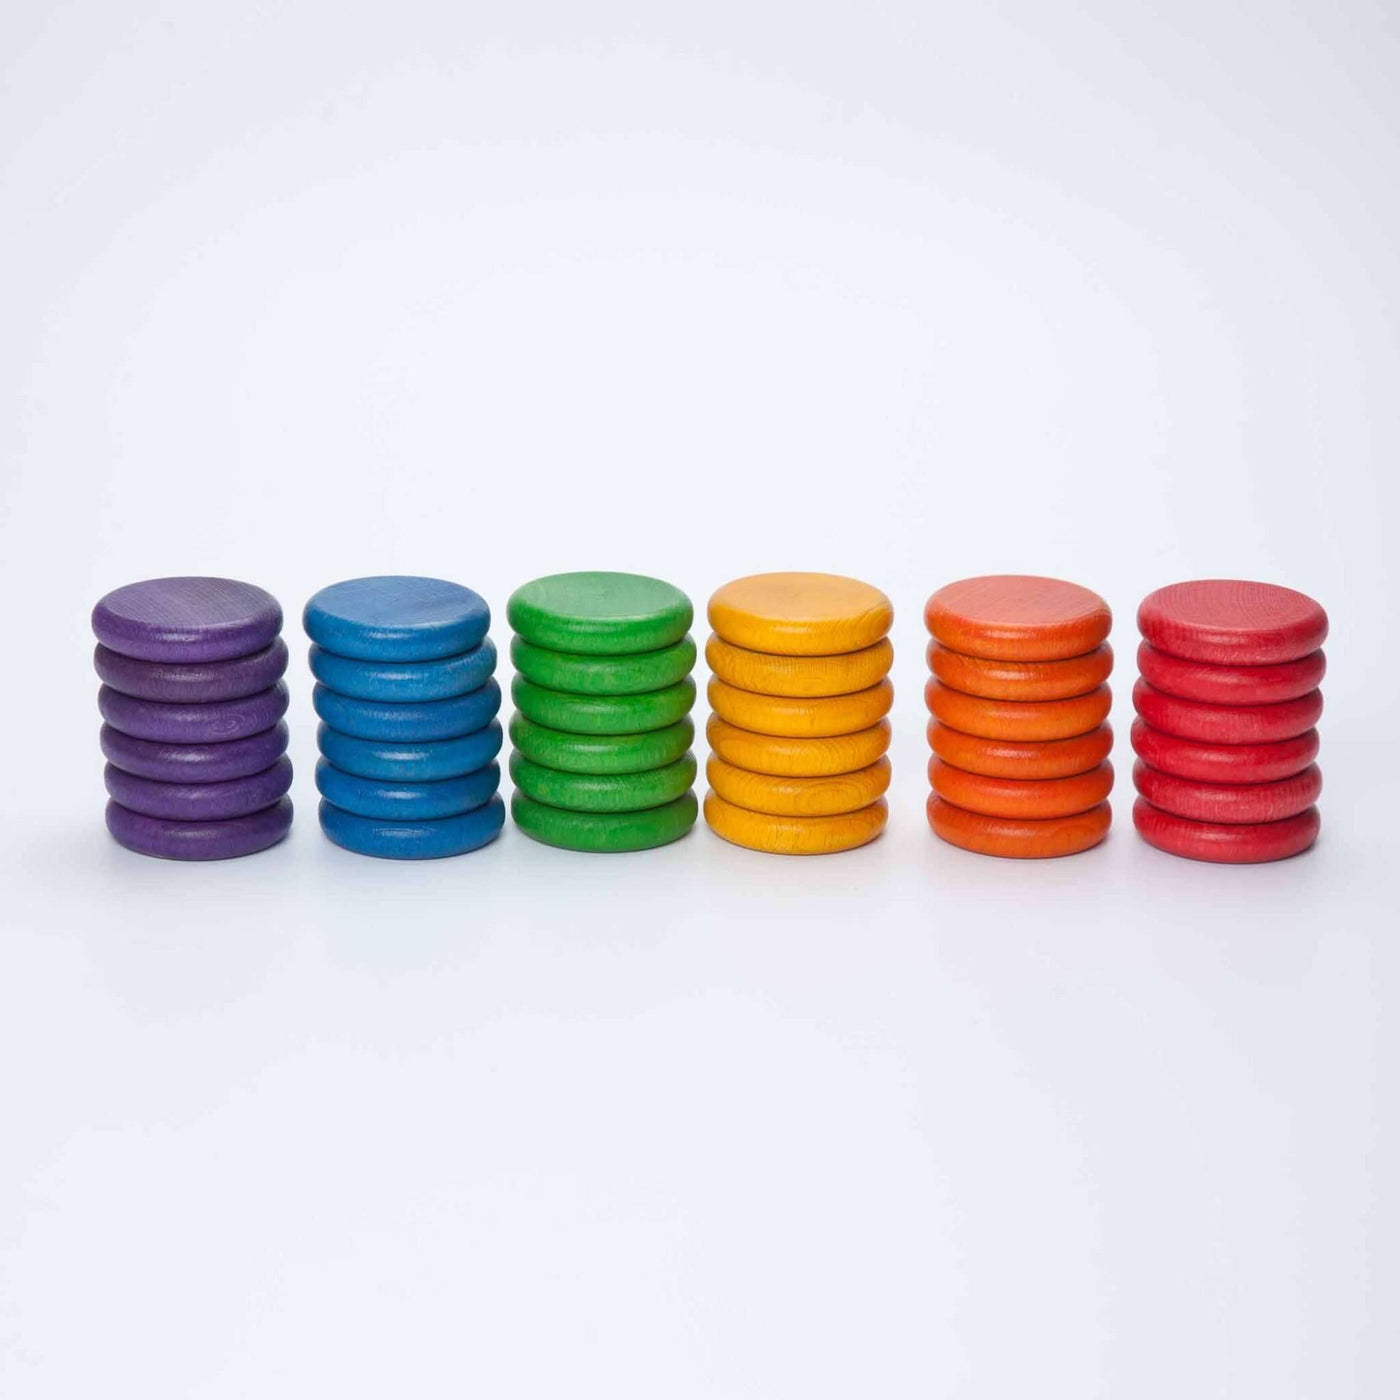 36 Grapat Rainbow Coins